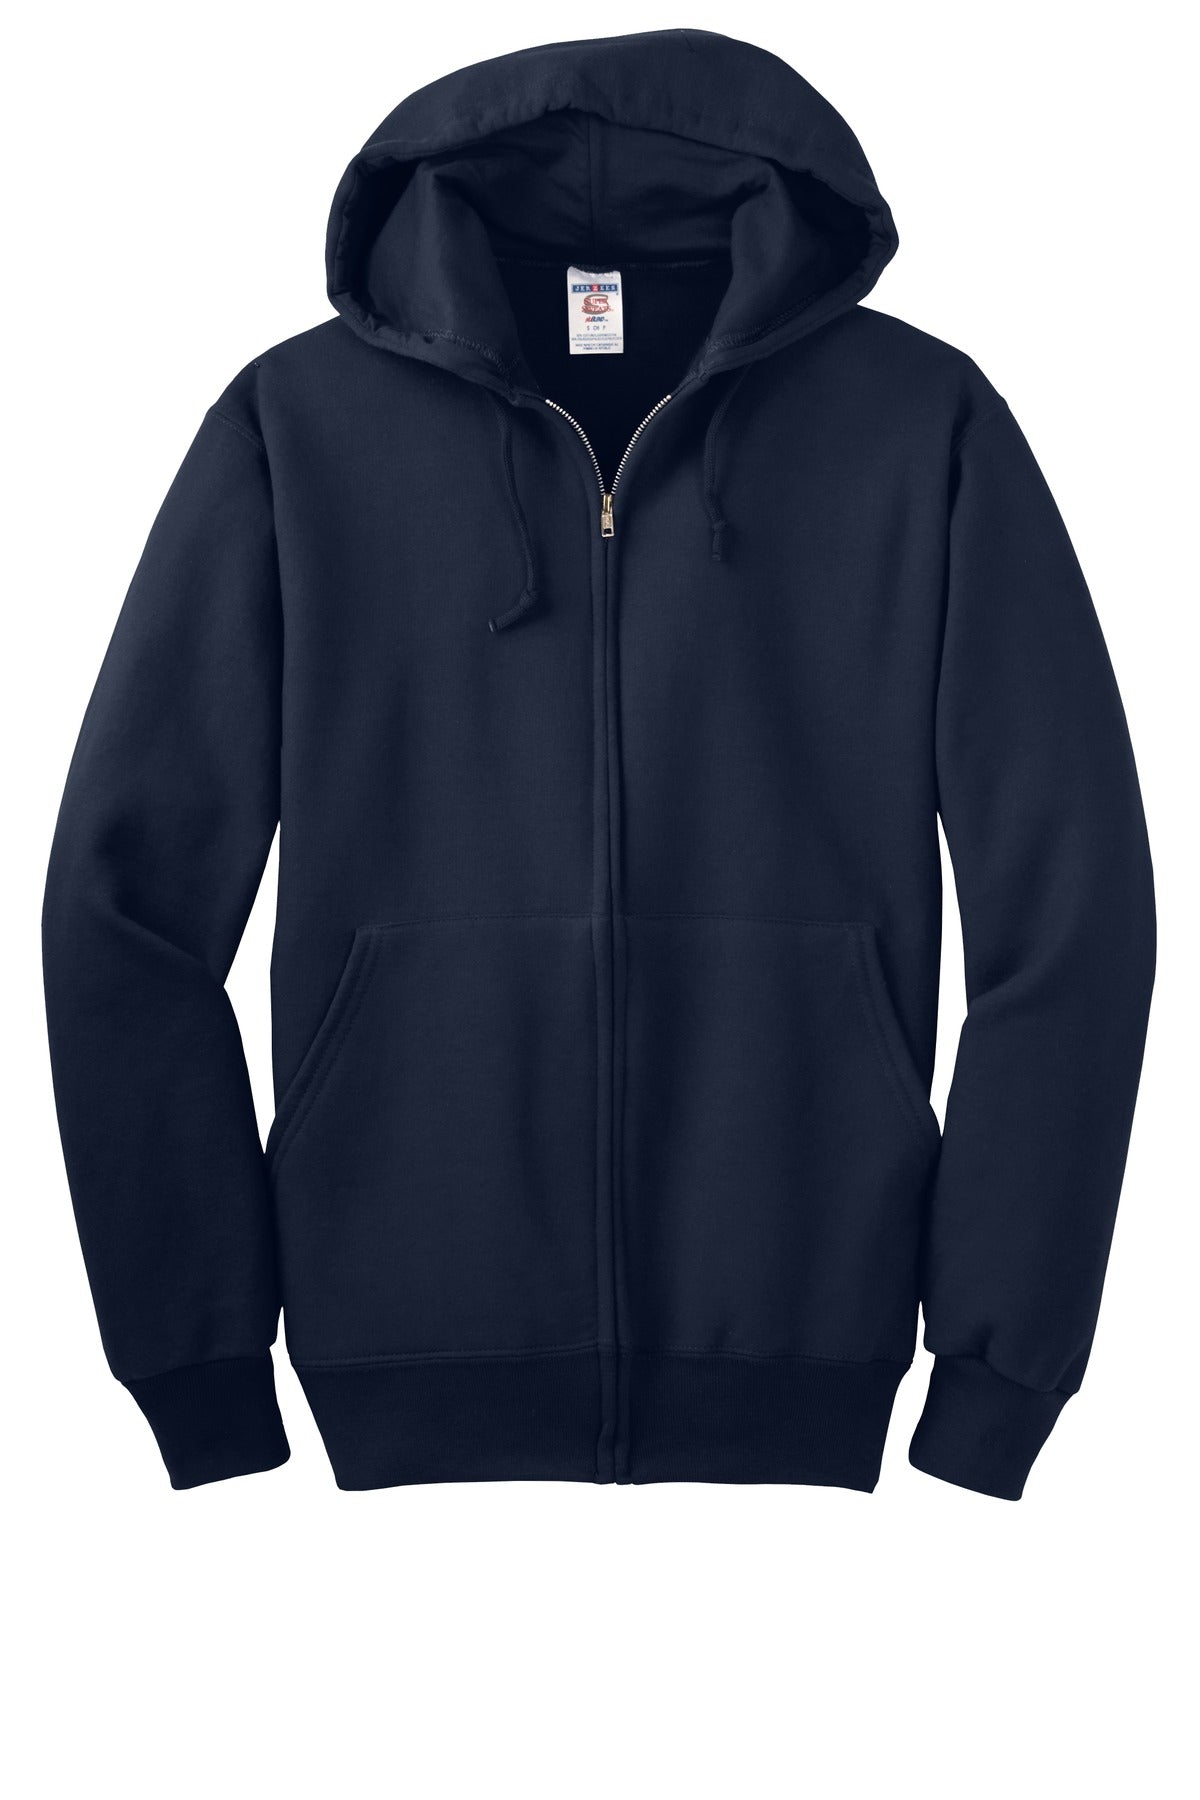 Jerzees Super Sweats NuBlend - Full-Zip Hooded Sweatshirt. 4999M